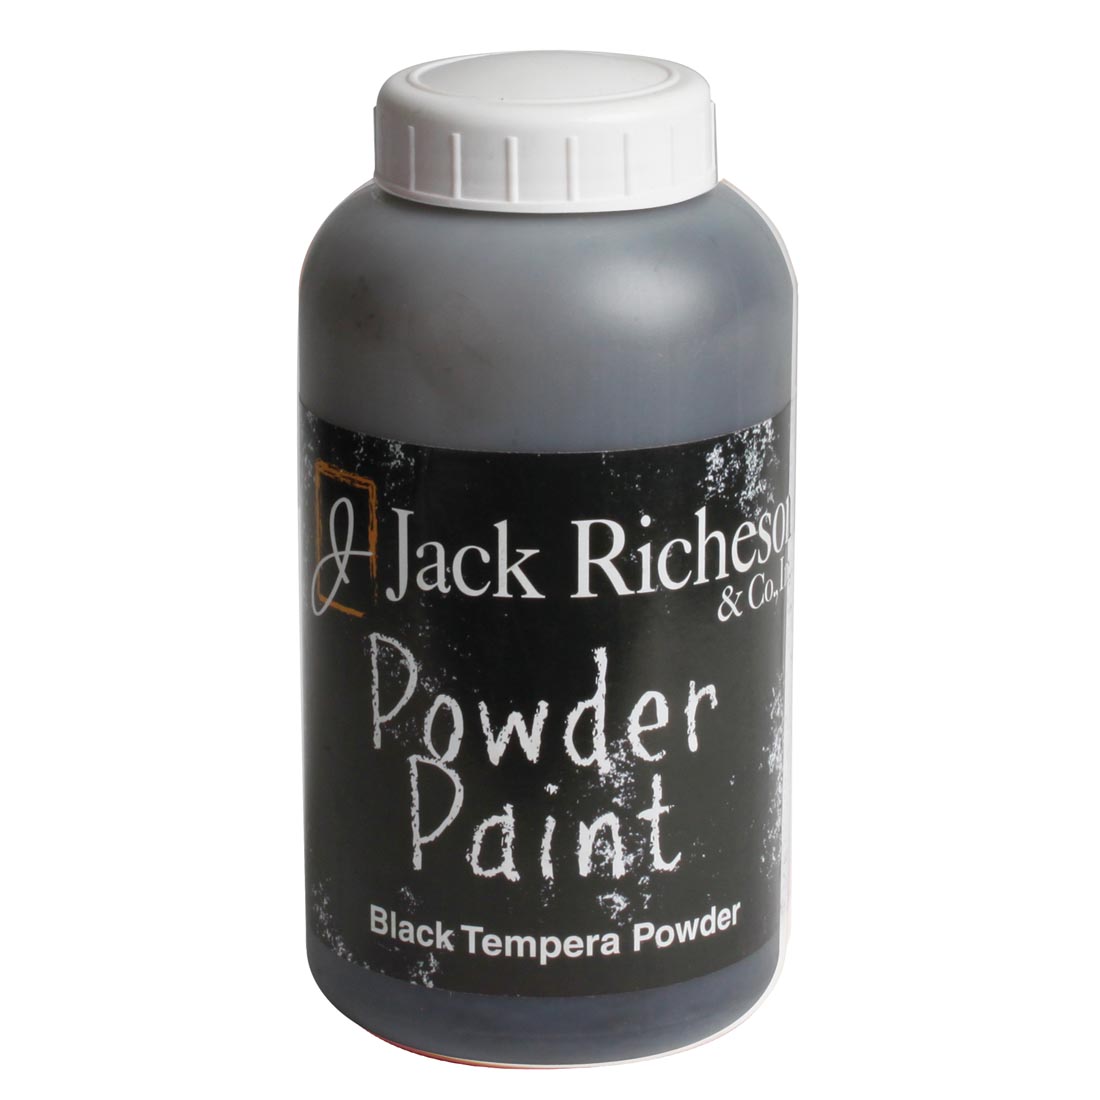 Jack Richeson Black Tempera Powder Paint